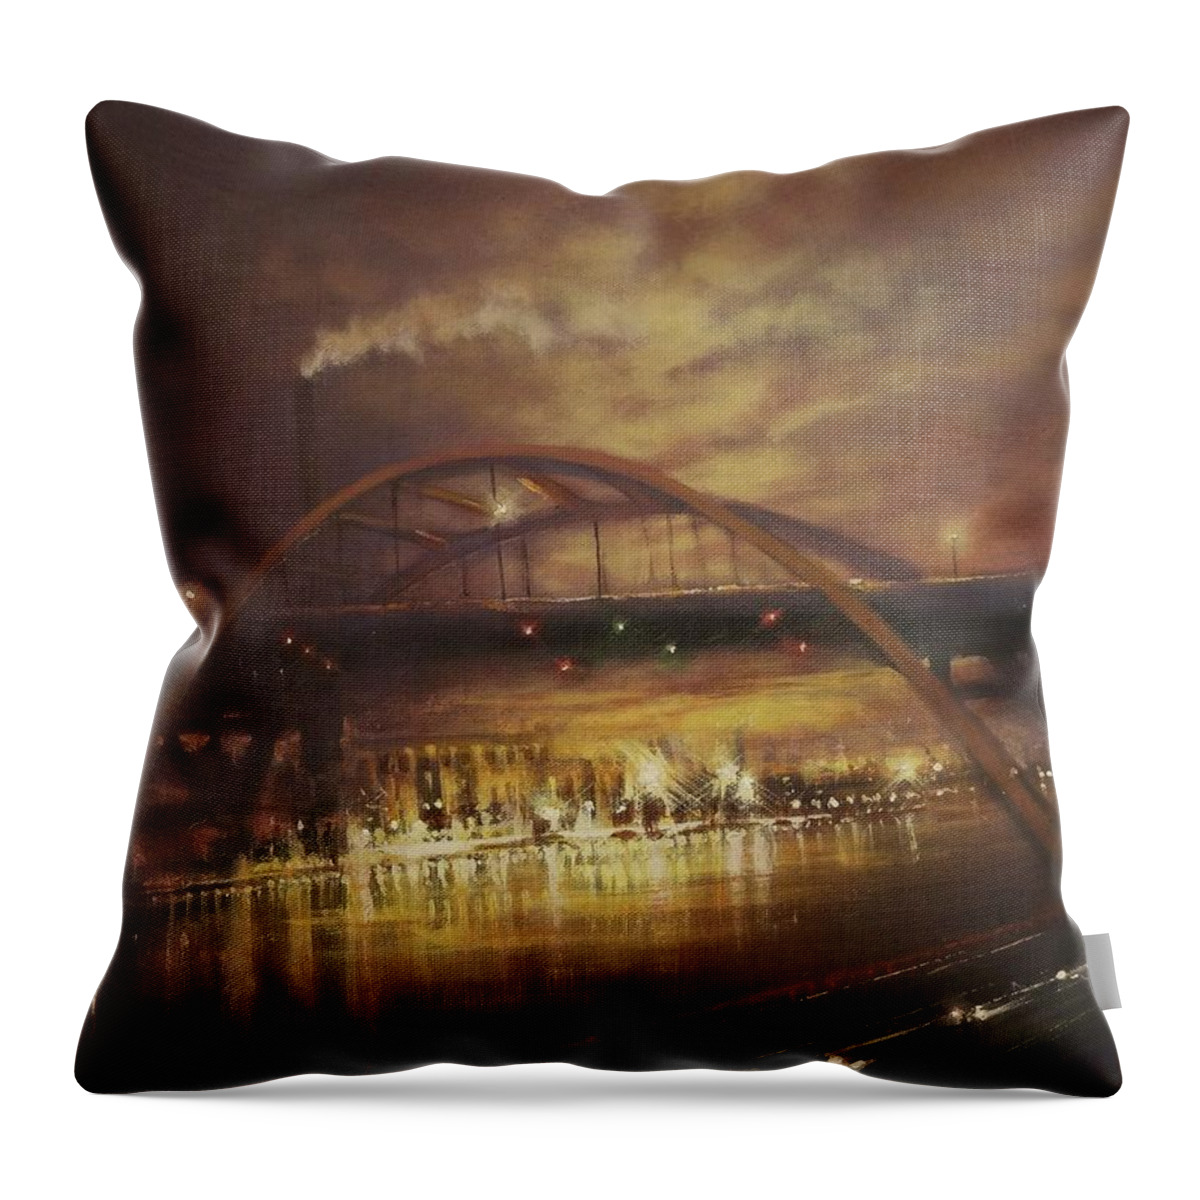 Hoan Bridge Throw Pillow featuring the painting Hoan Bridge by Tom Shropshire